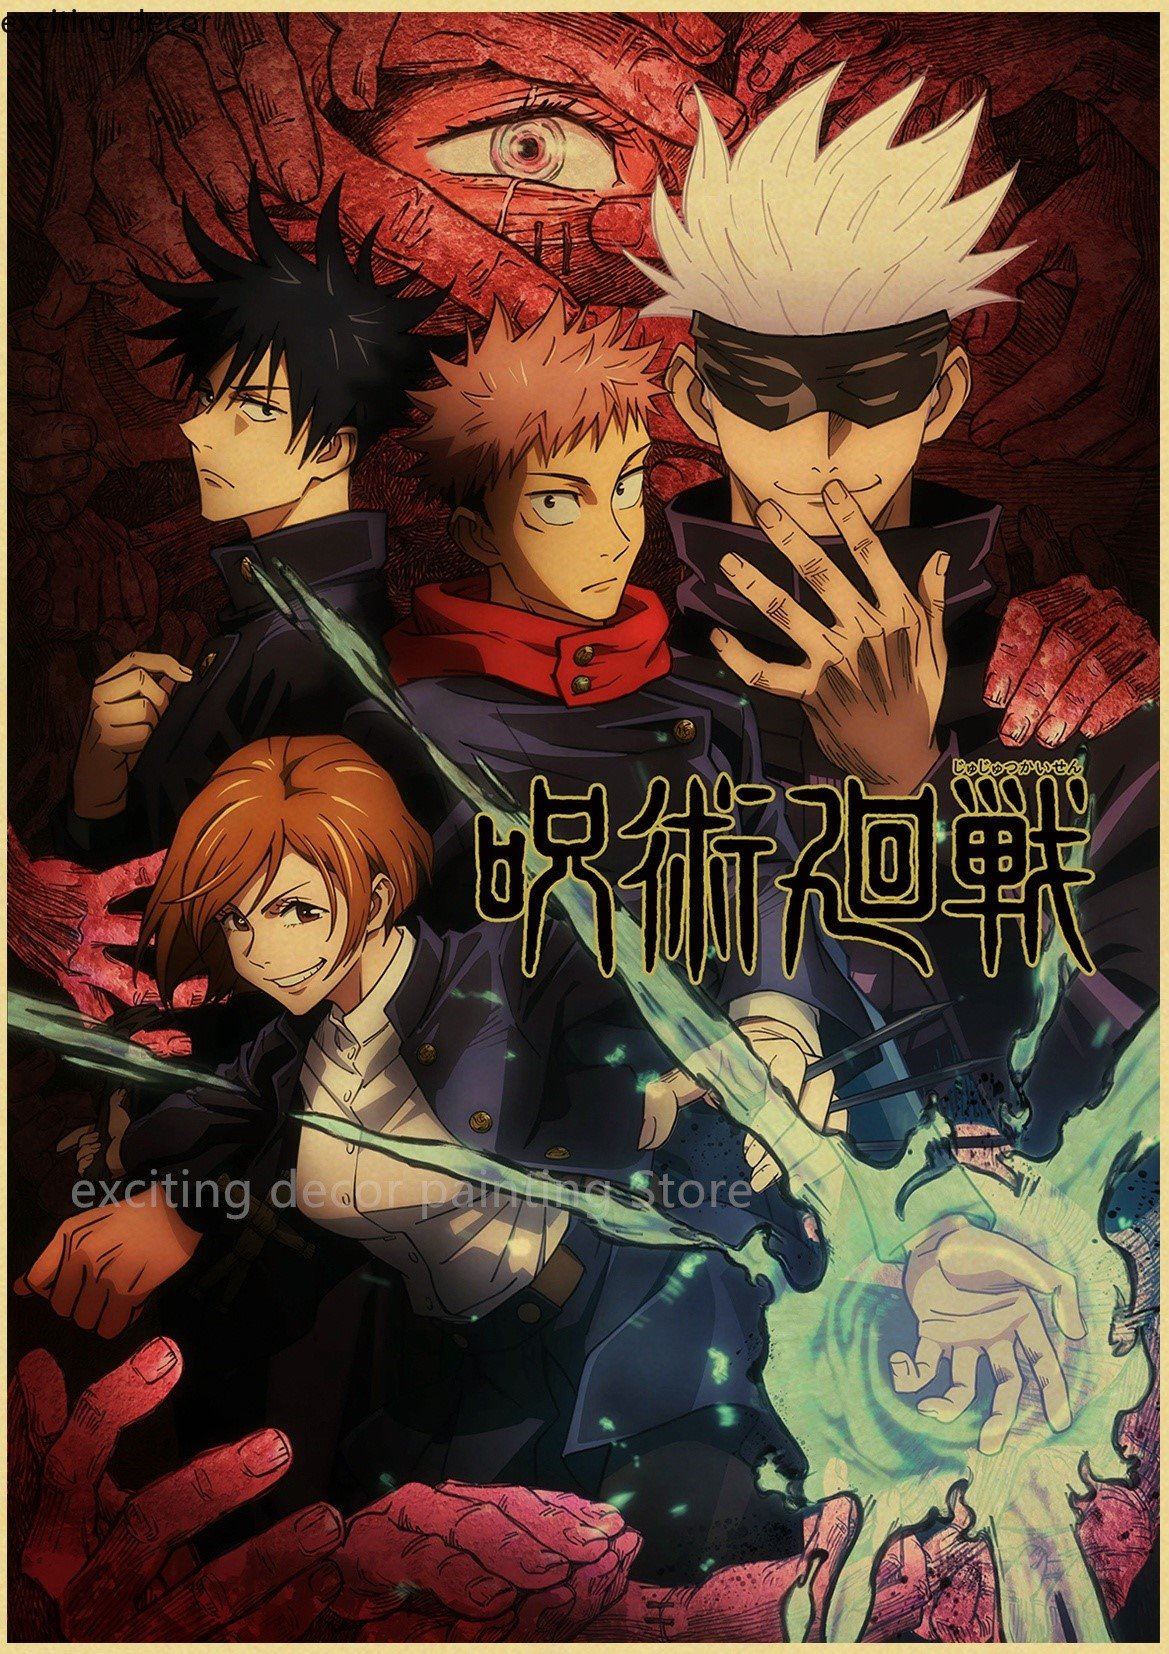 Anime Manga Poster Merch Shop: Art, Posters & Prints